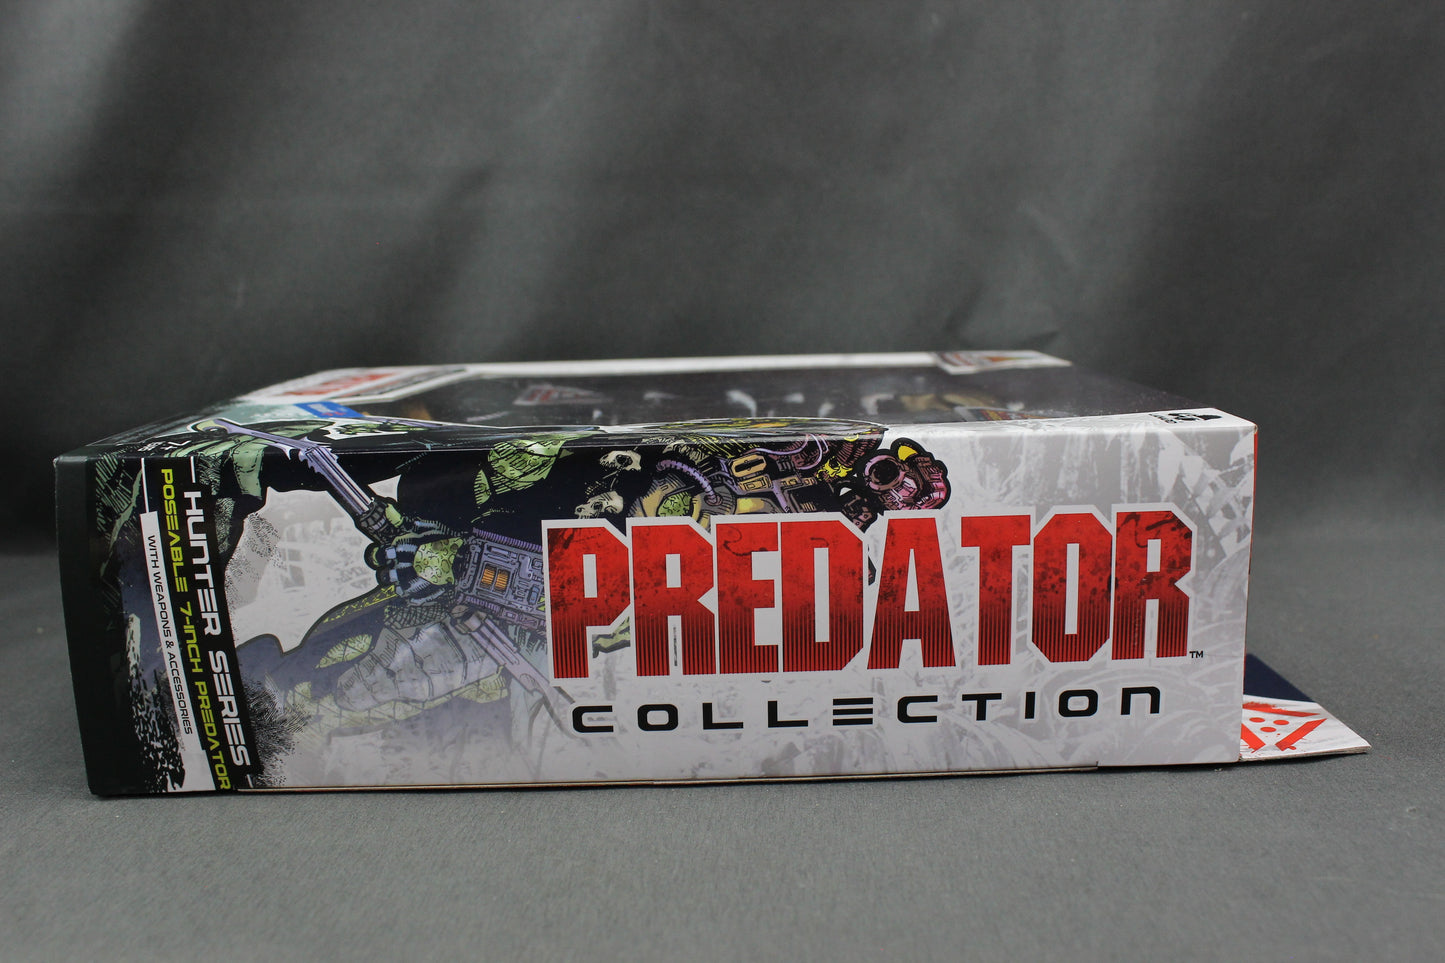 City Hunter Predator Walmart Ex  (Sealed) Predator Lanard